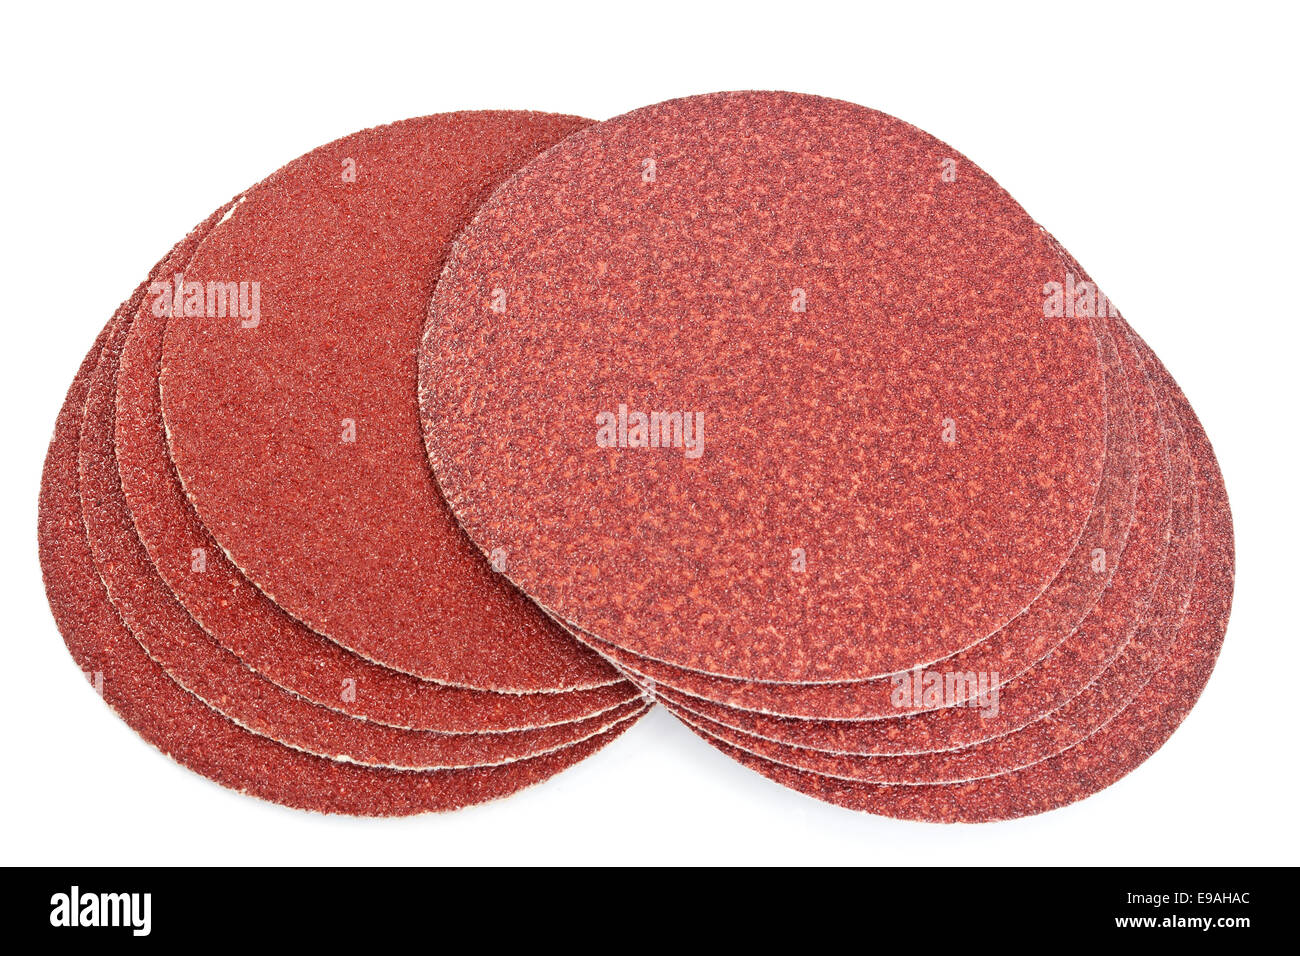 Disk of brown sandpaper Stock Photo